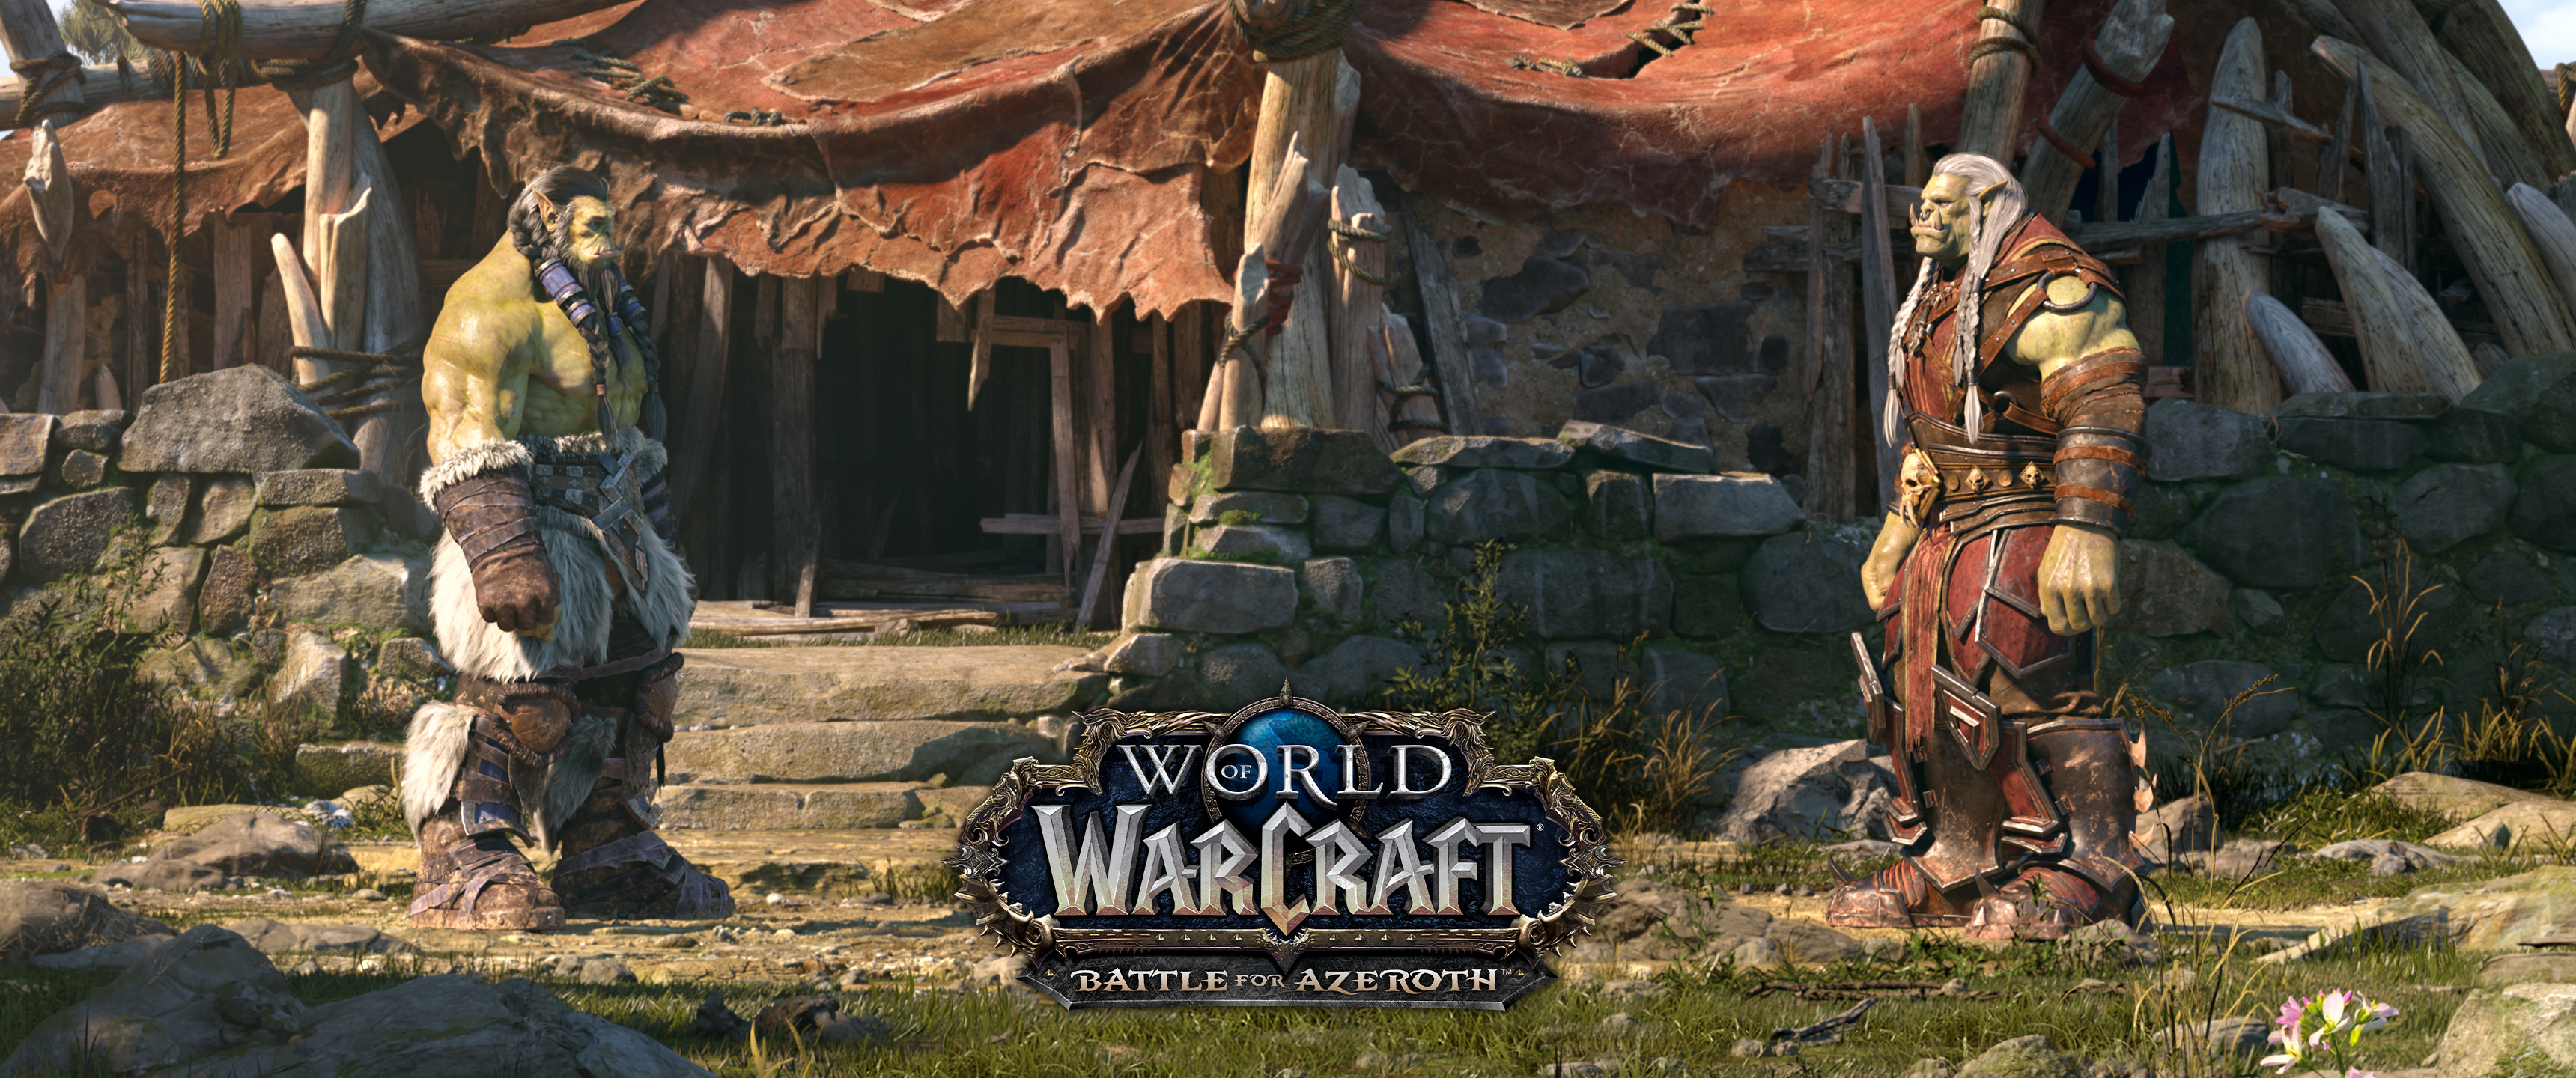 465635 baixar imagens videogame, world of warcraft: battle for azeroth, thrall (world of warcraft), varok saurfang, world of warcraft - papéis de parede e protetores de tela gratuitamente